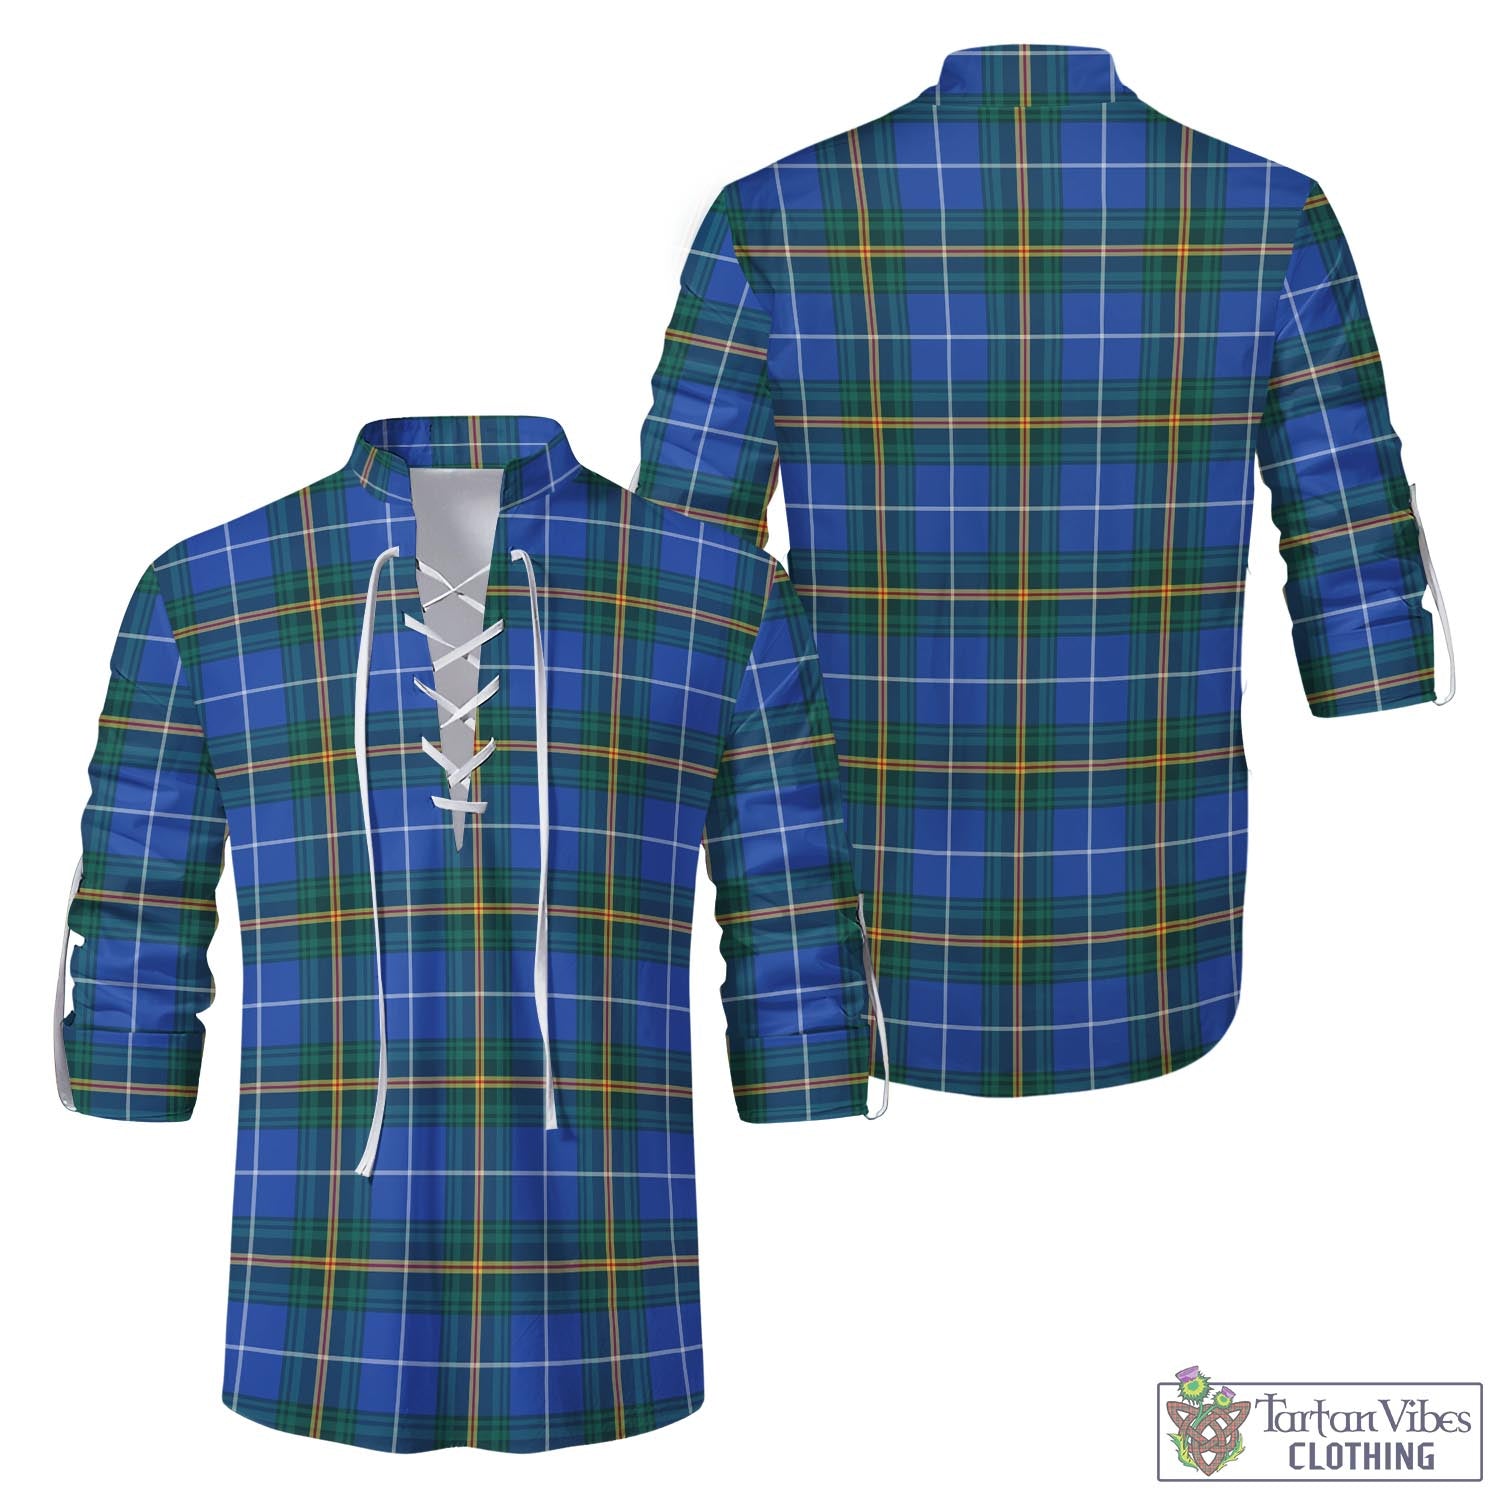 Tartan Vibes Clothing Nova Scotia Province Canada Tartan Men's Scottish Traditional Jacobite Ghillie Kilt Shirt